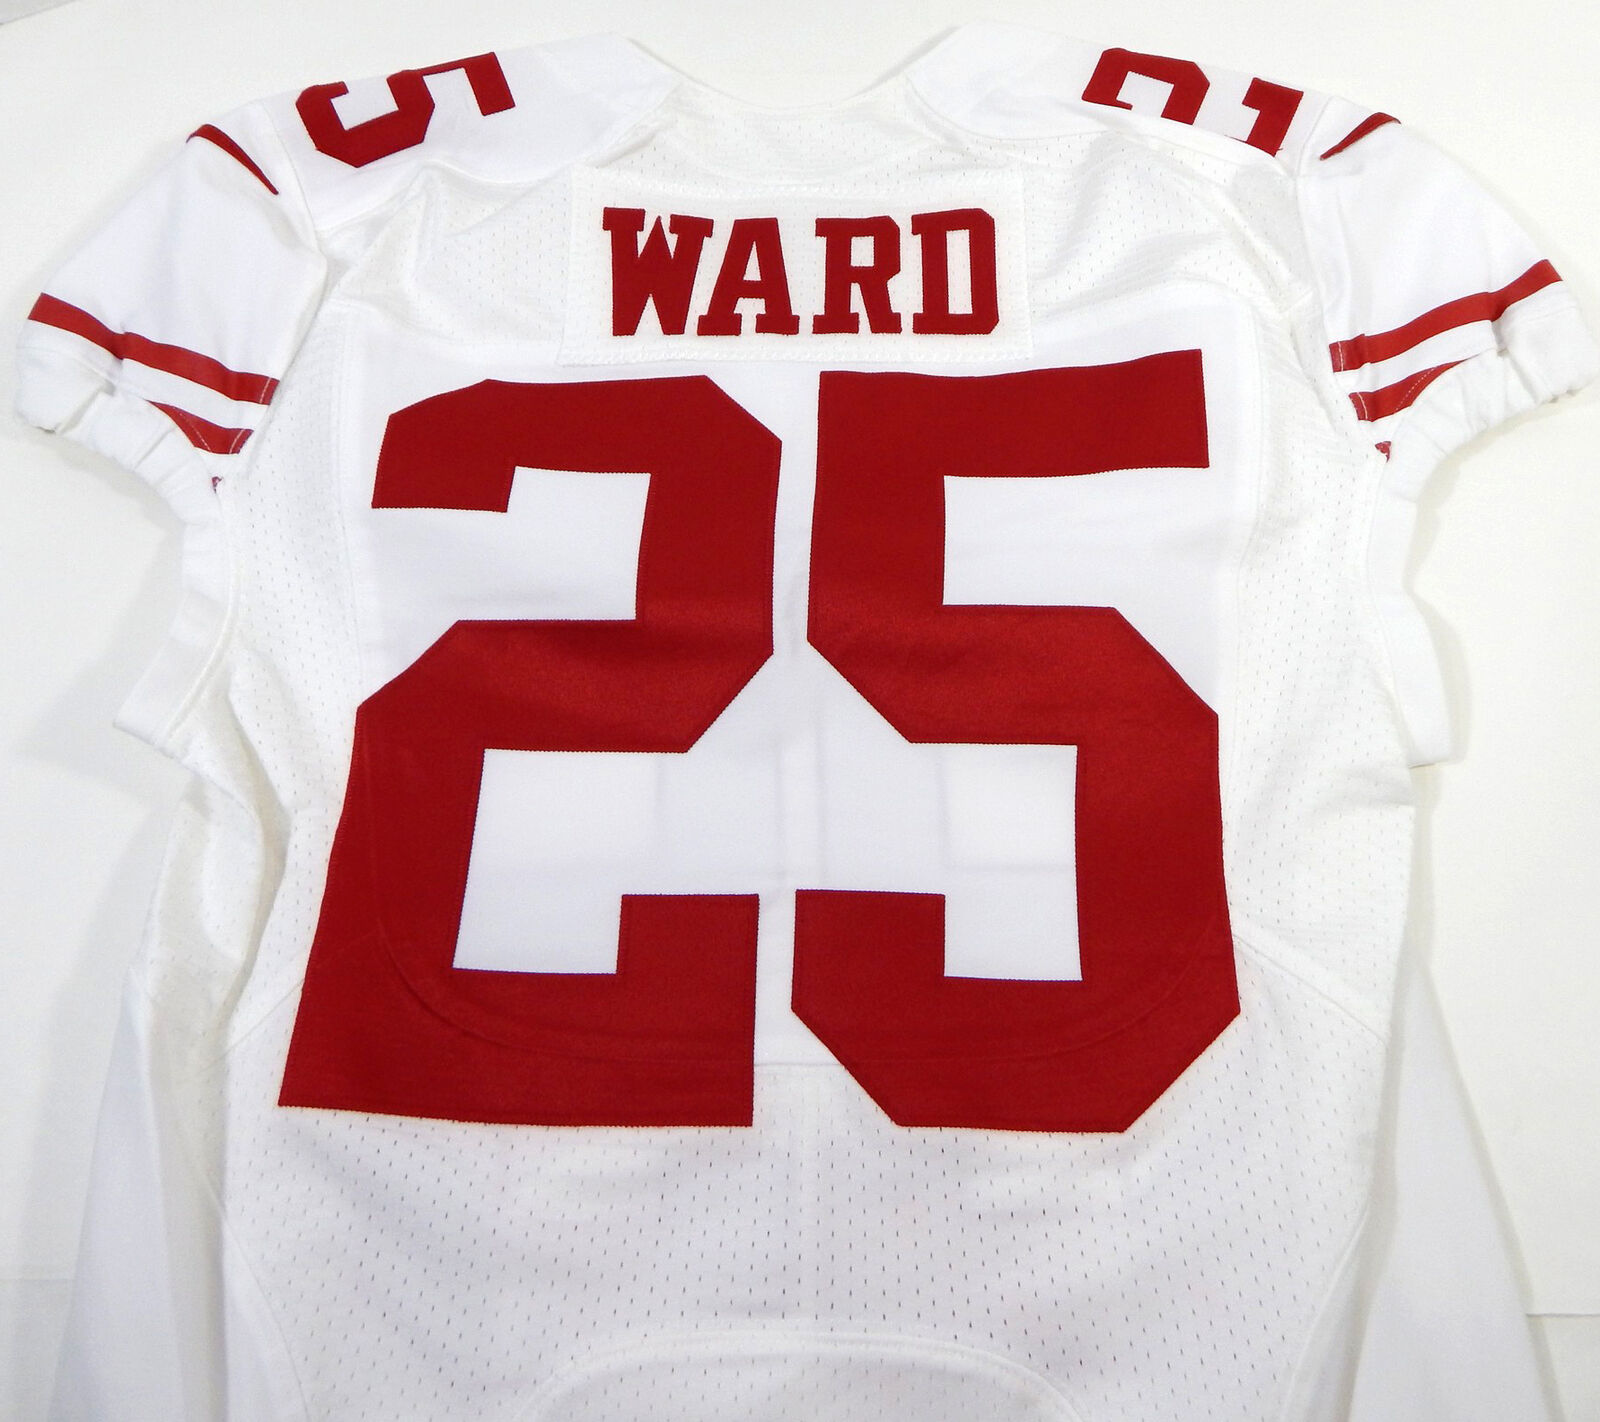 49ers ward jersey